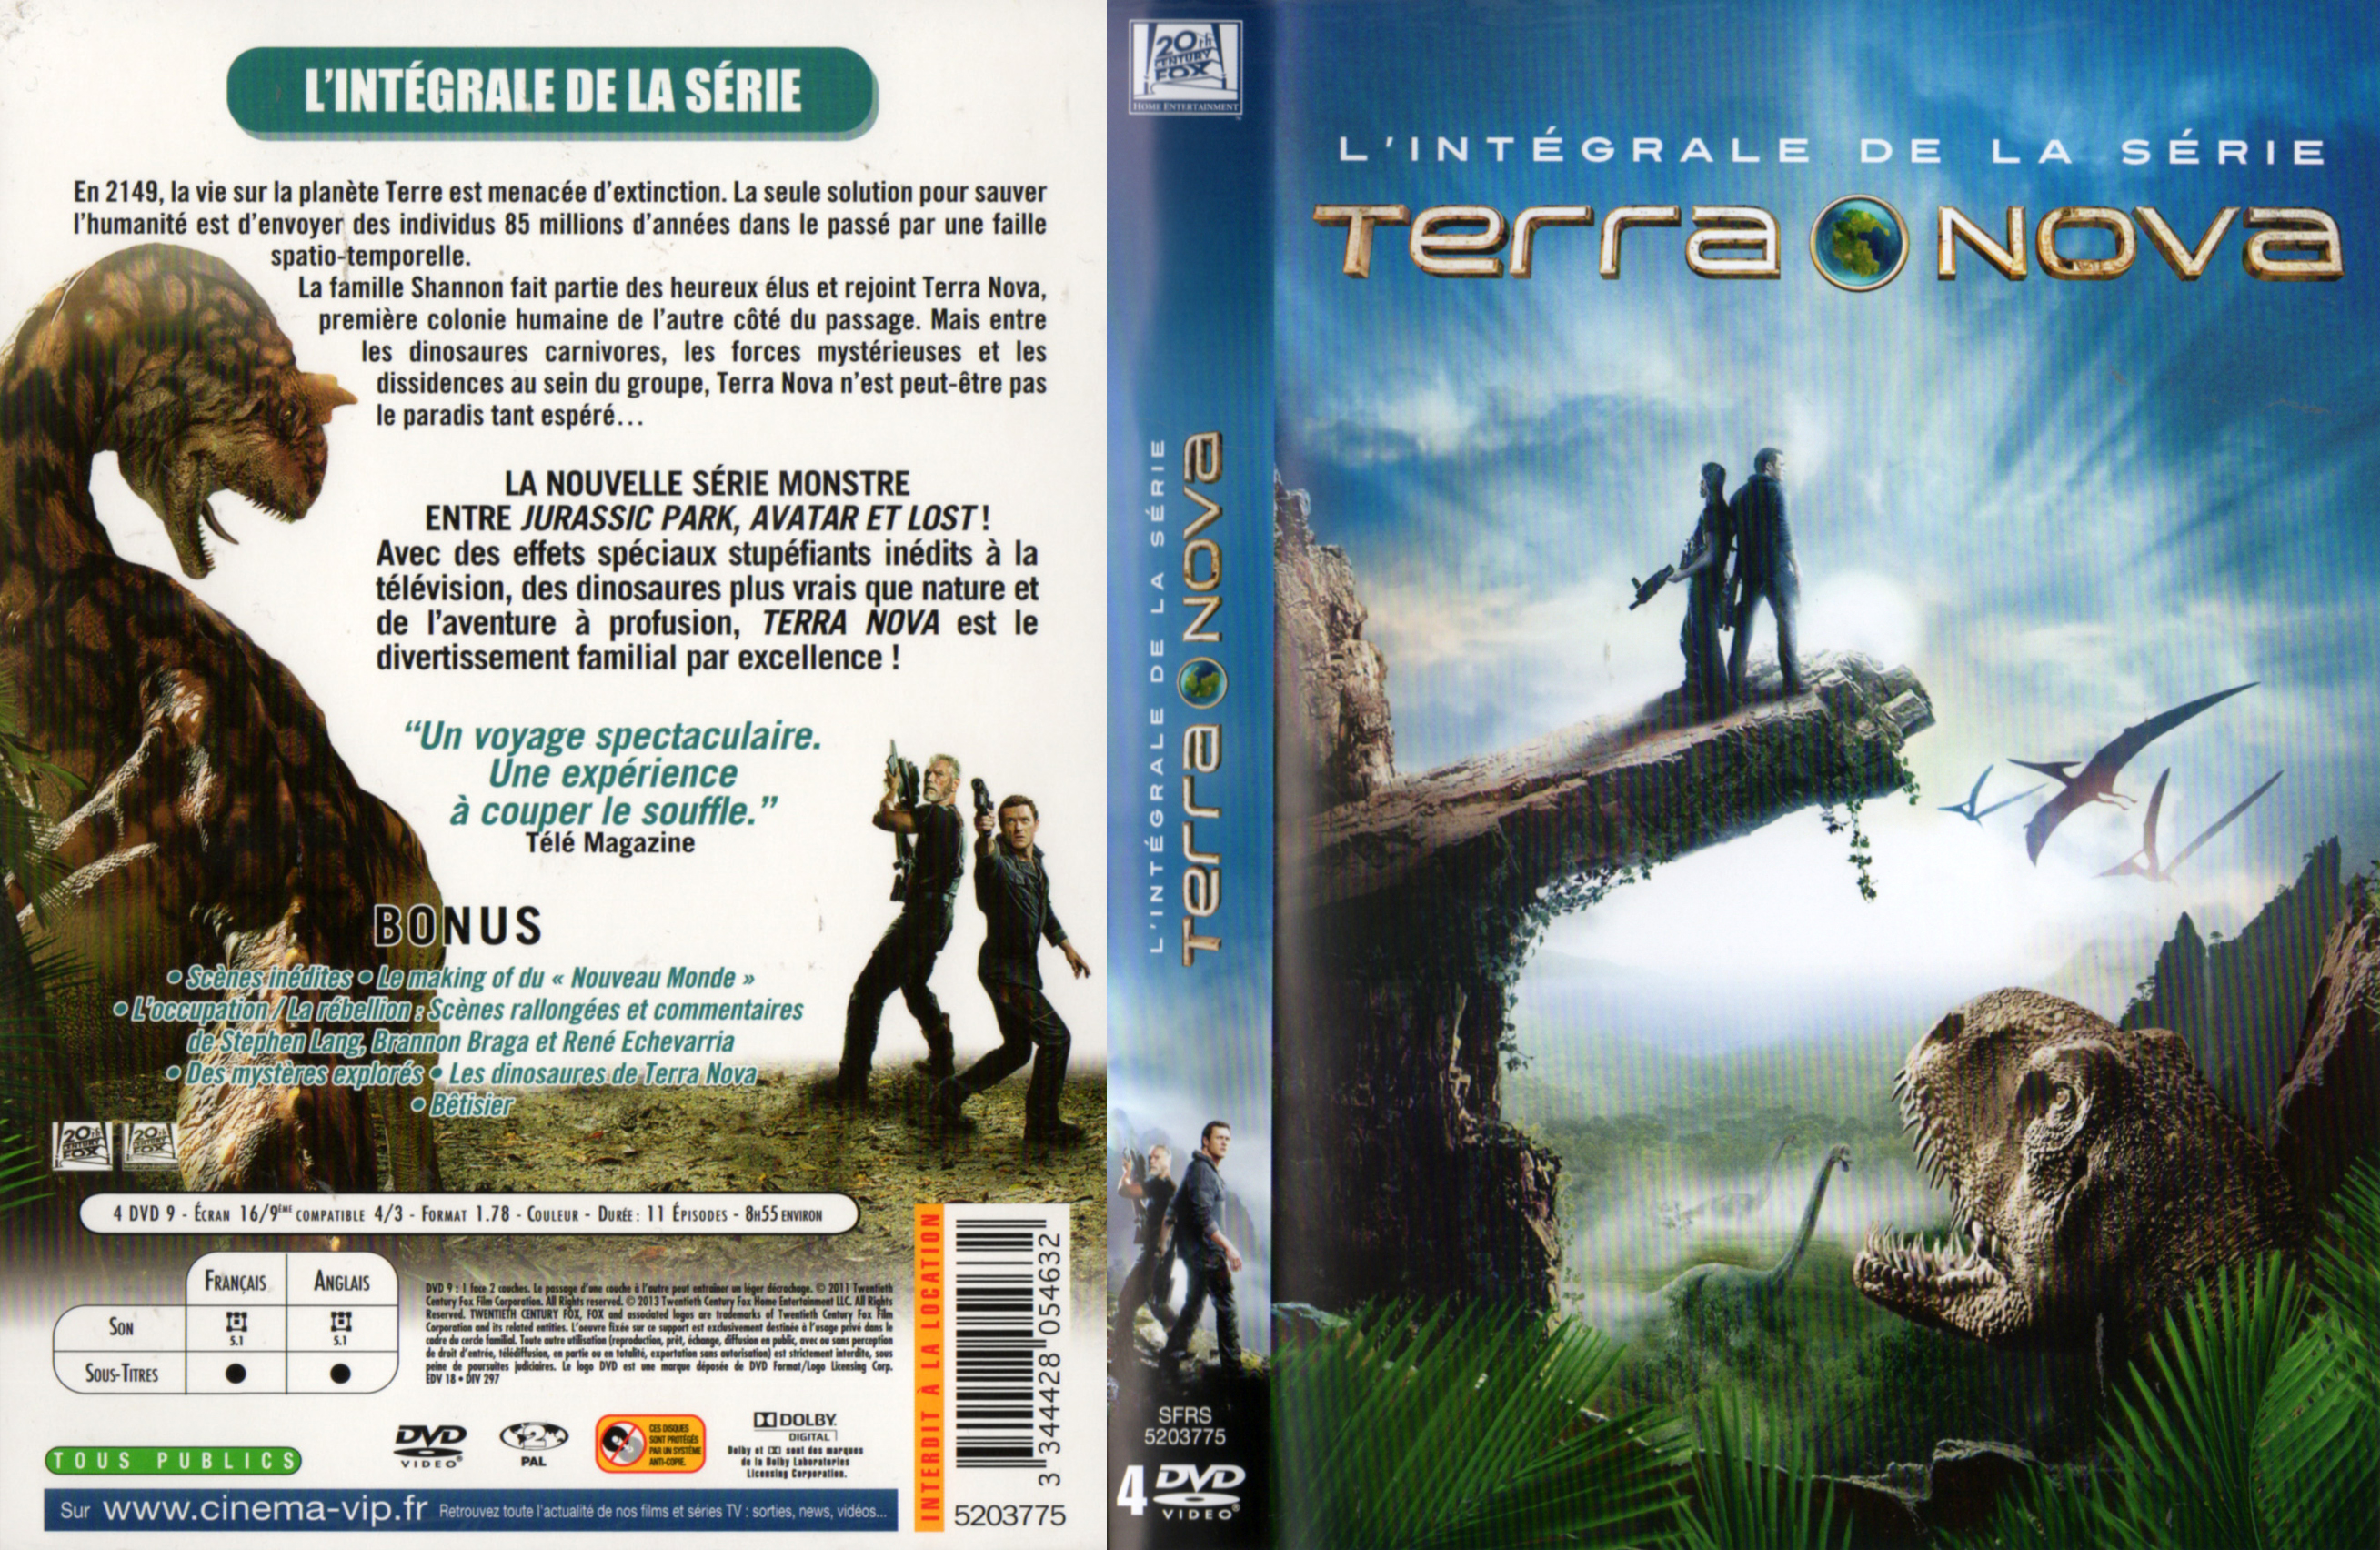 Jaquette DVD Terra nova saison 1 v2